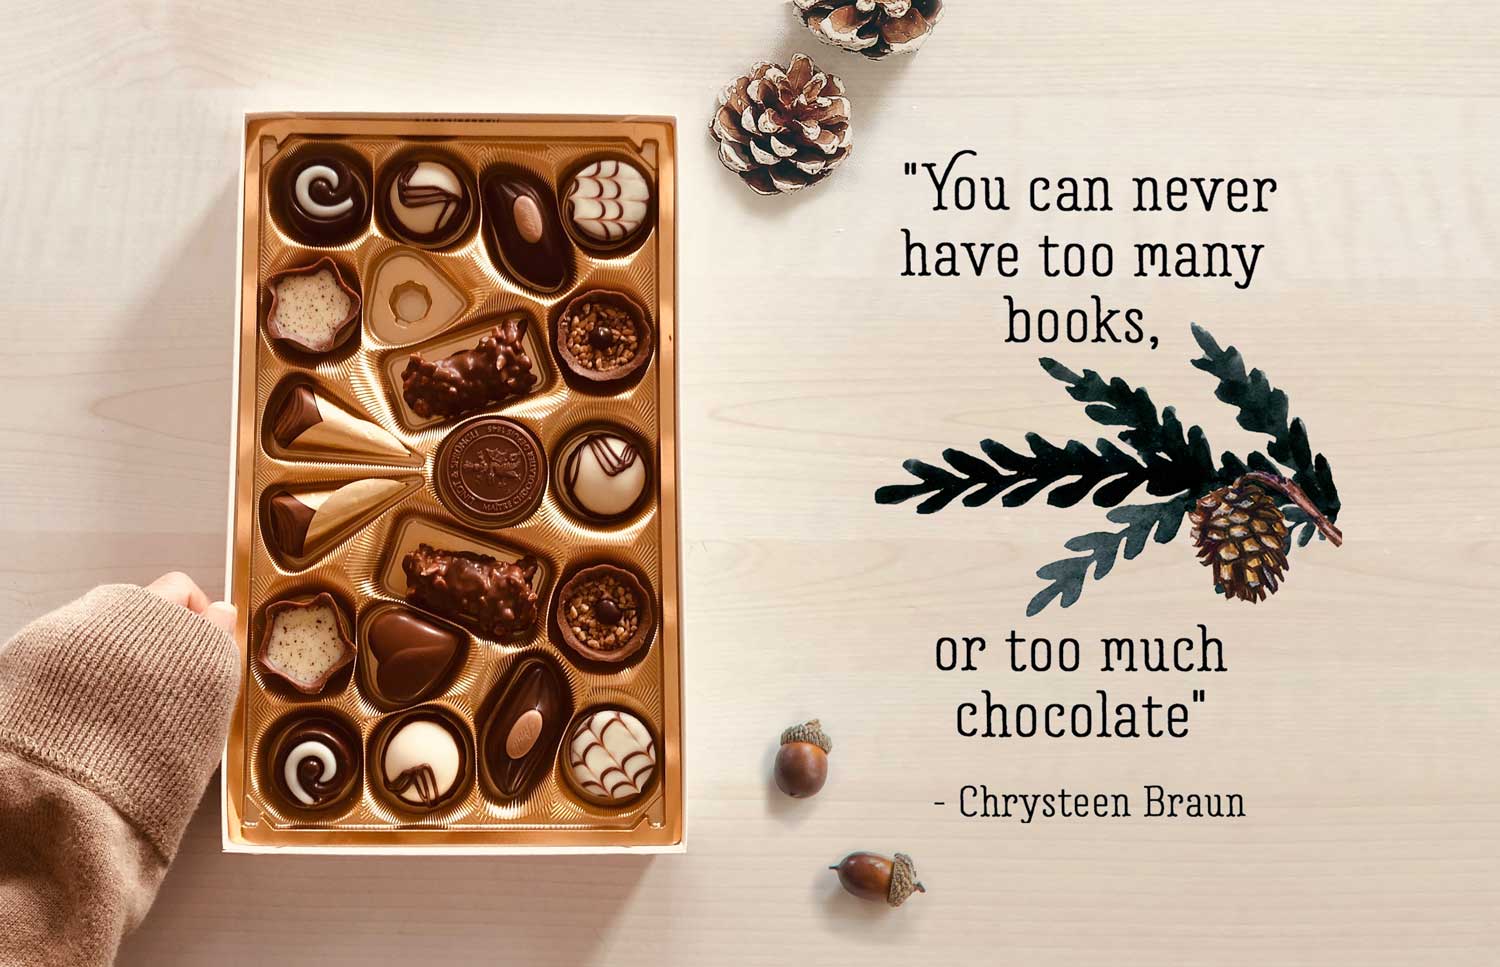 Chocolates and books quote